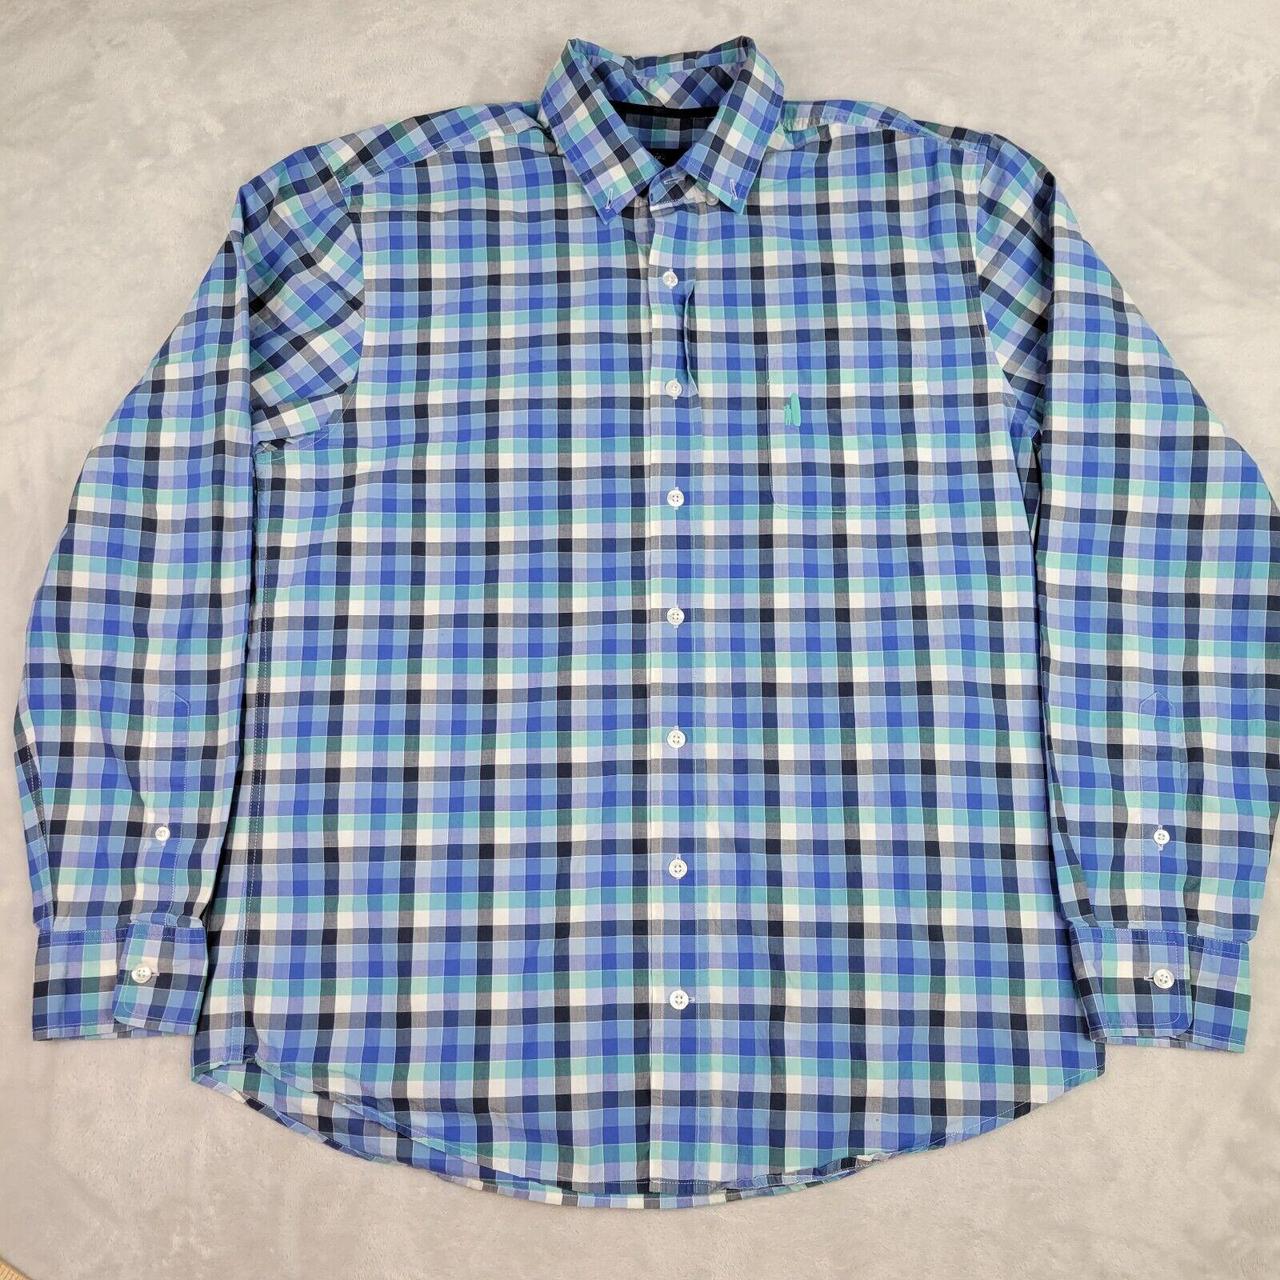 Product Image 1 - Johnnie-O Mens Shirt Large Blue